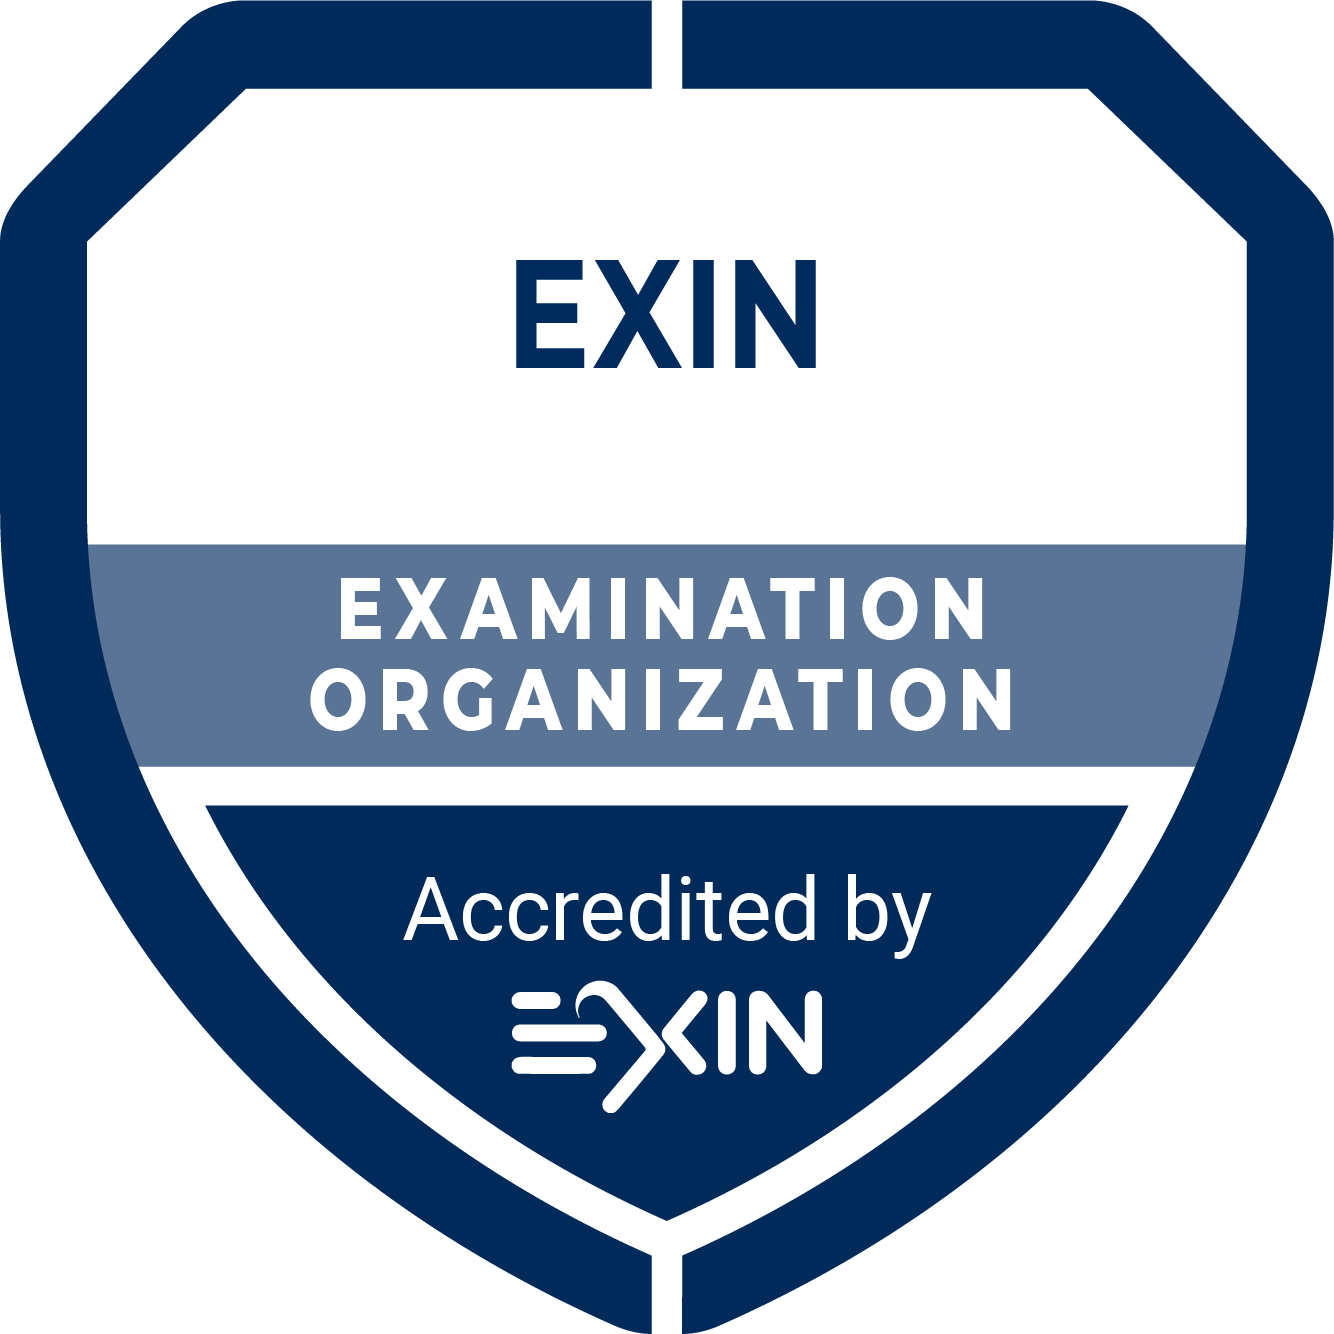 EXIN: International certifications